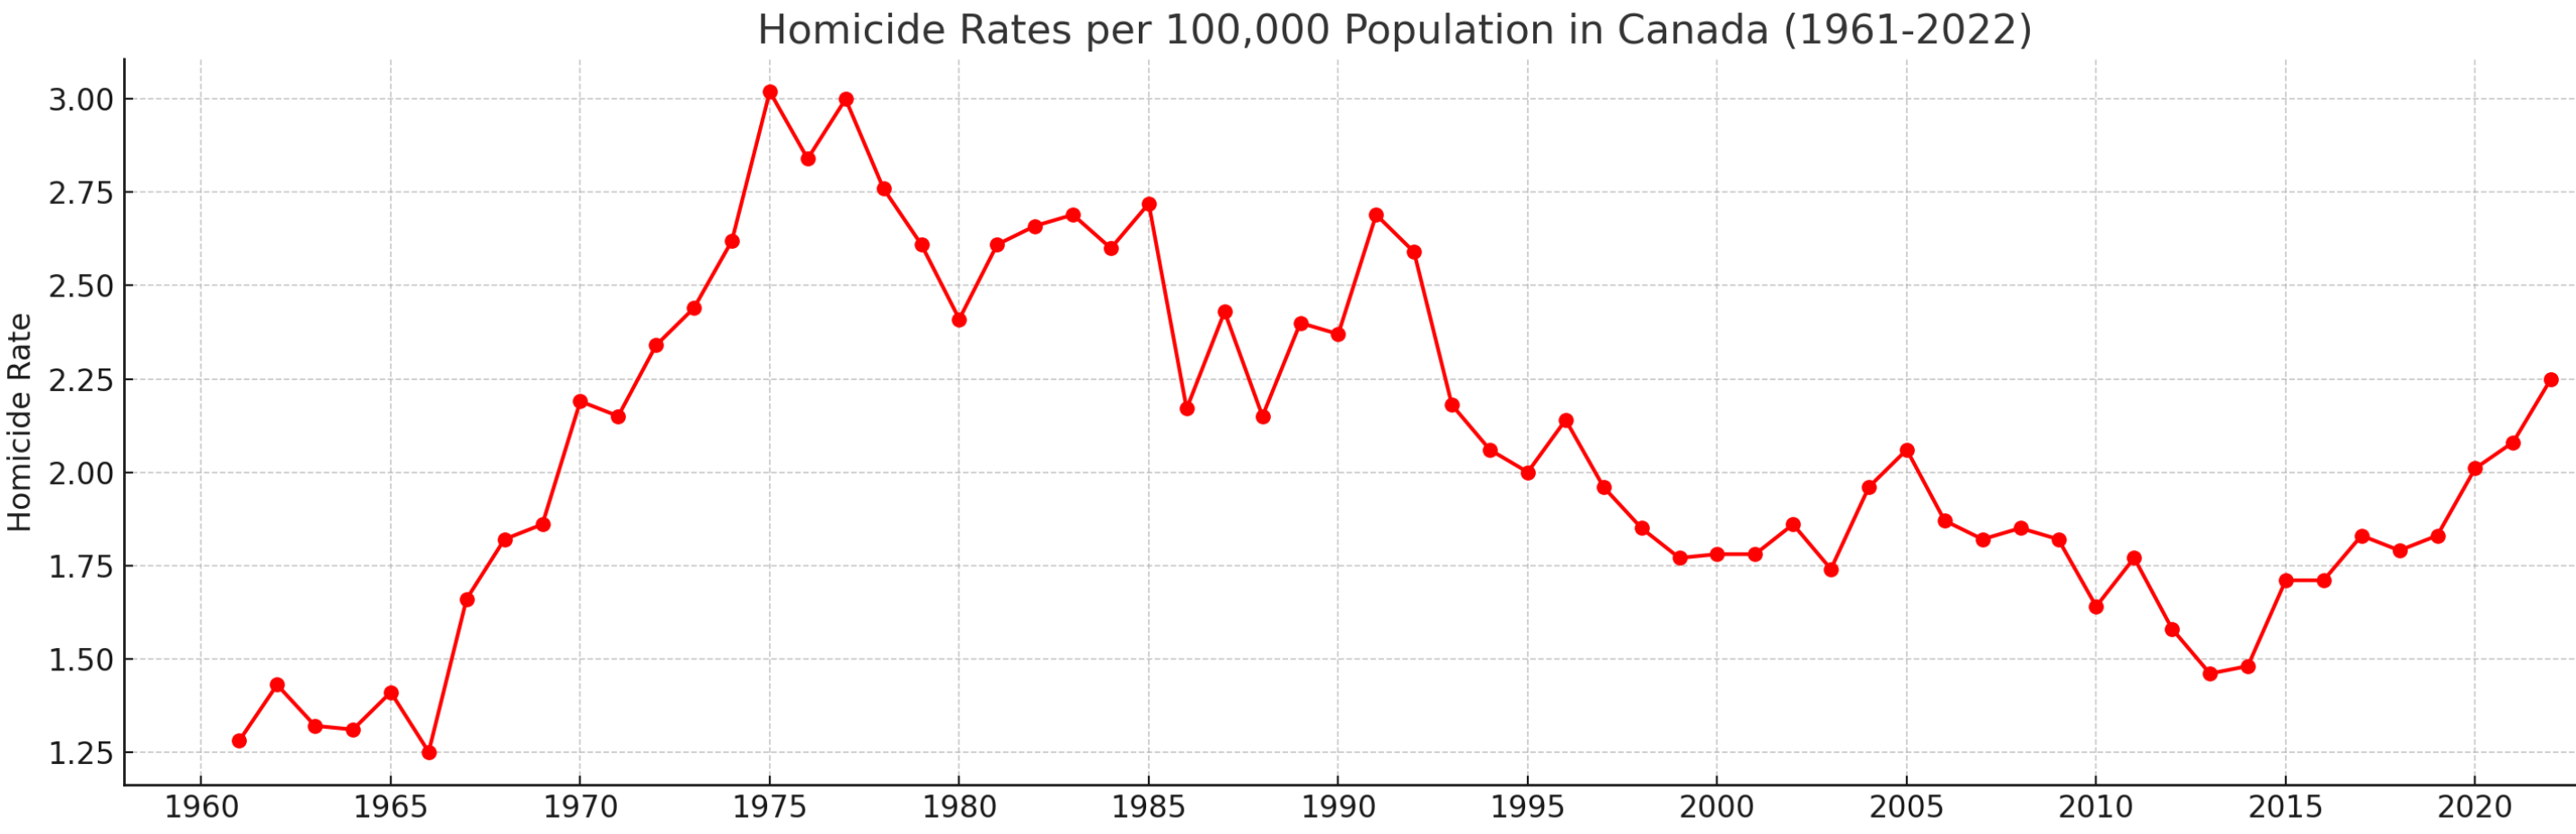 Canada homicide rates